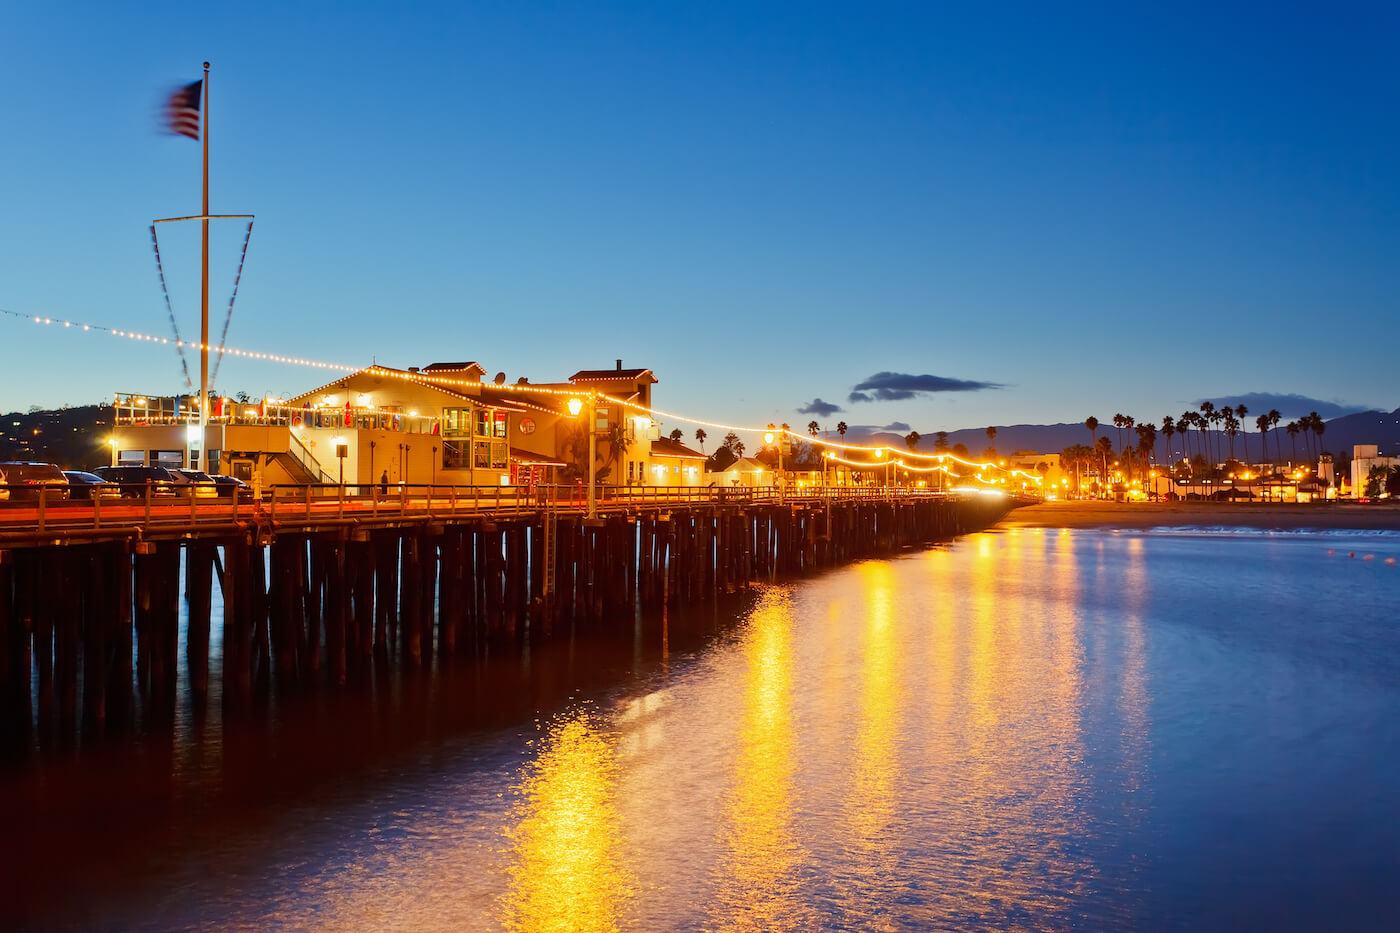 View of water and pier in Santa Barbara